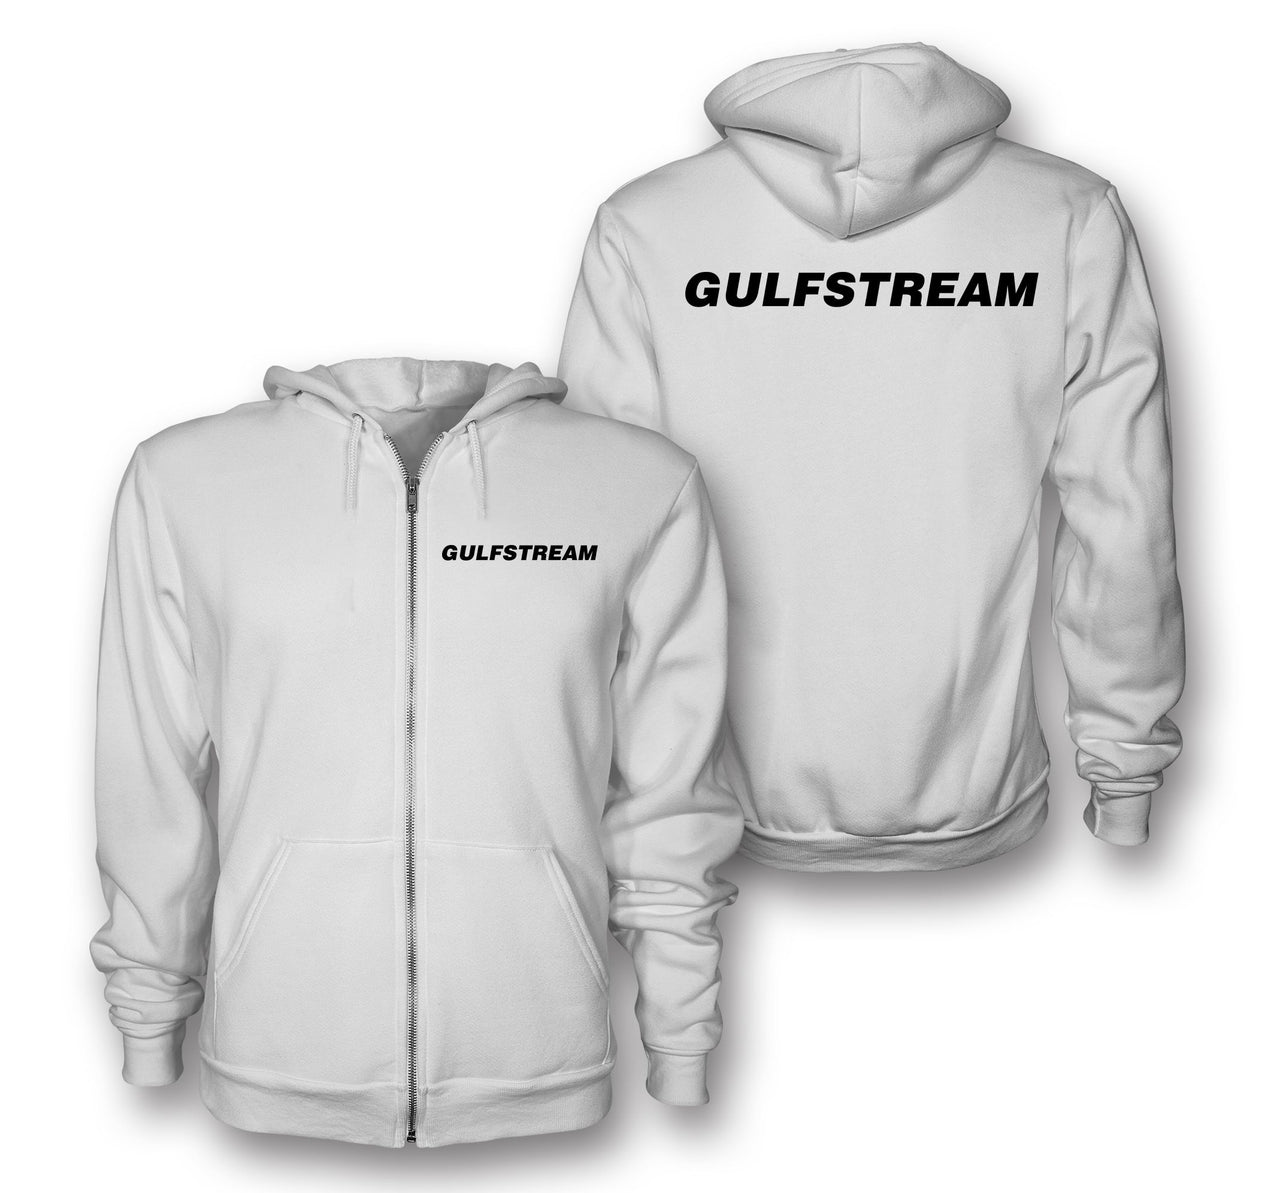 Gulfstream & Text Designed Zipped Hoodies